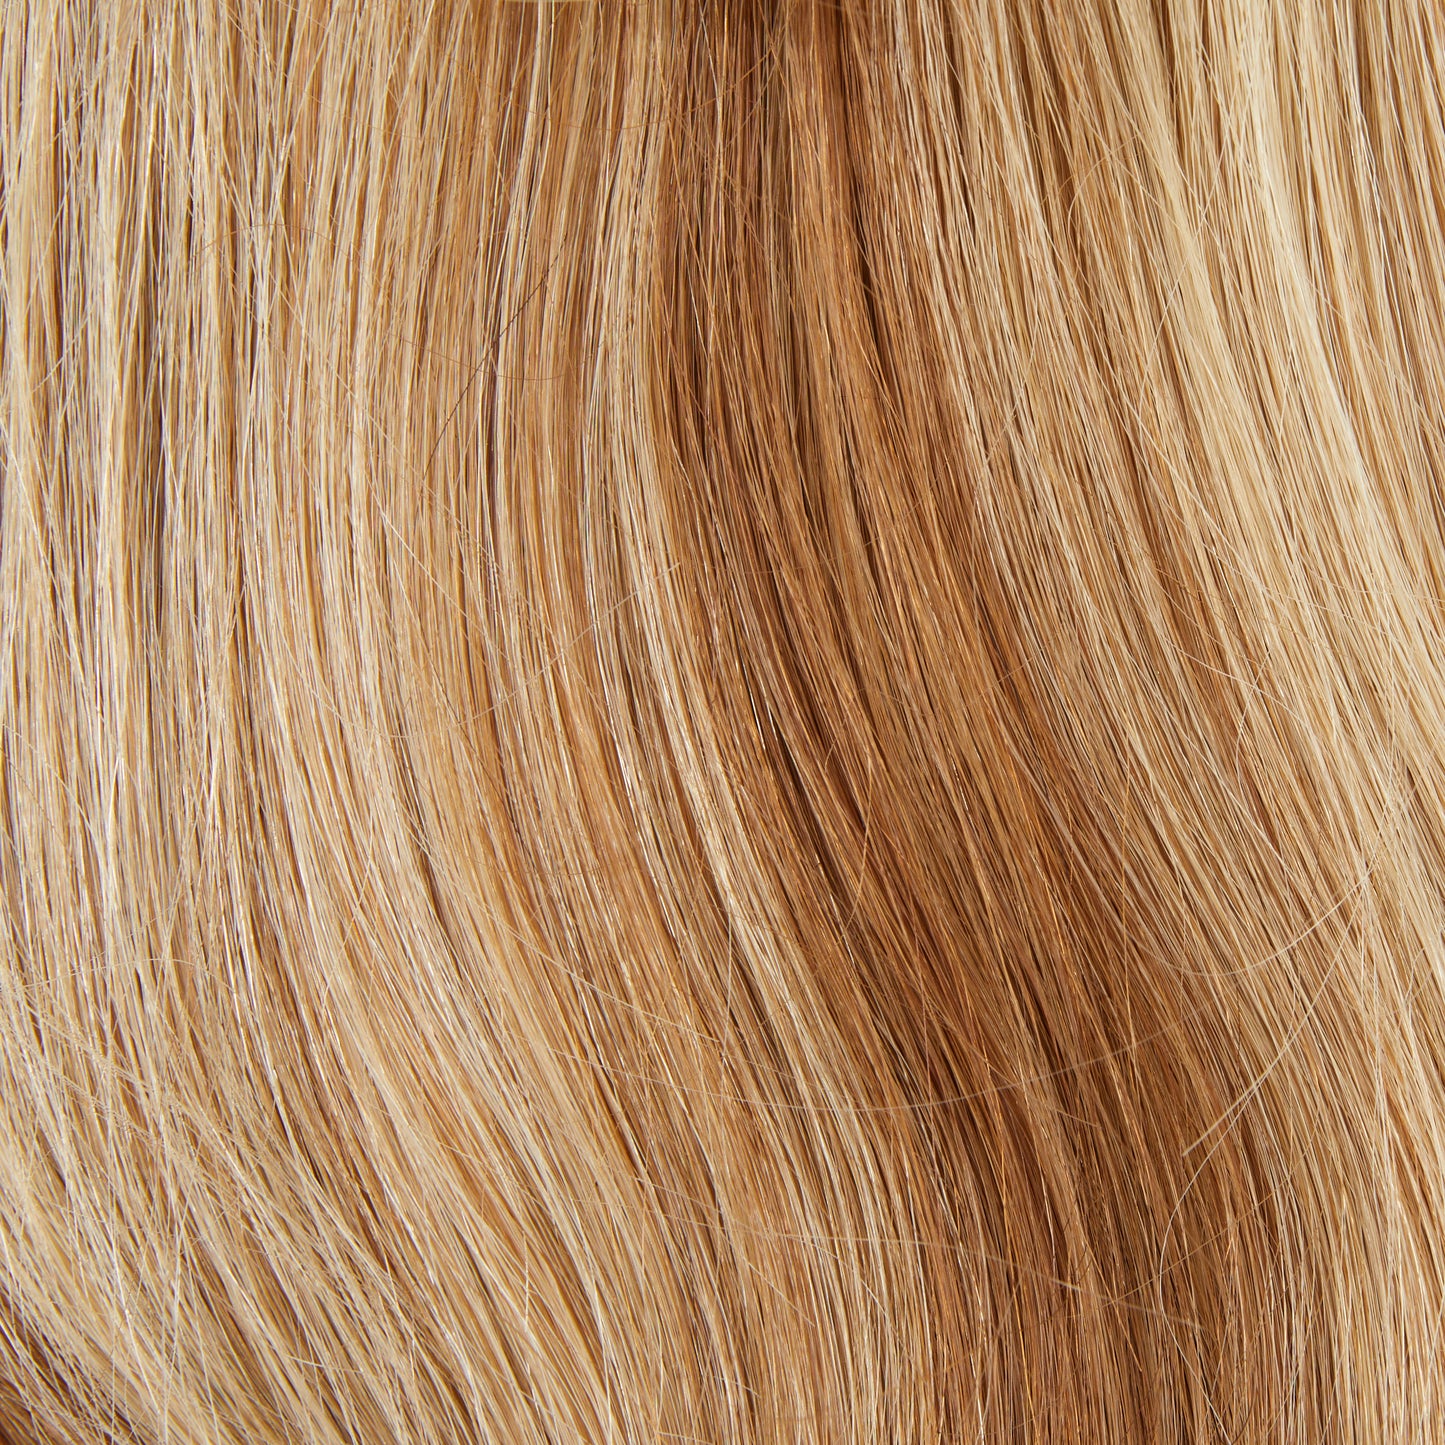 Platinum Blond #6-613 Hair Extension